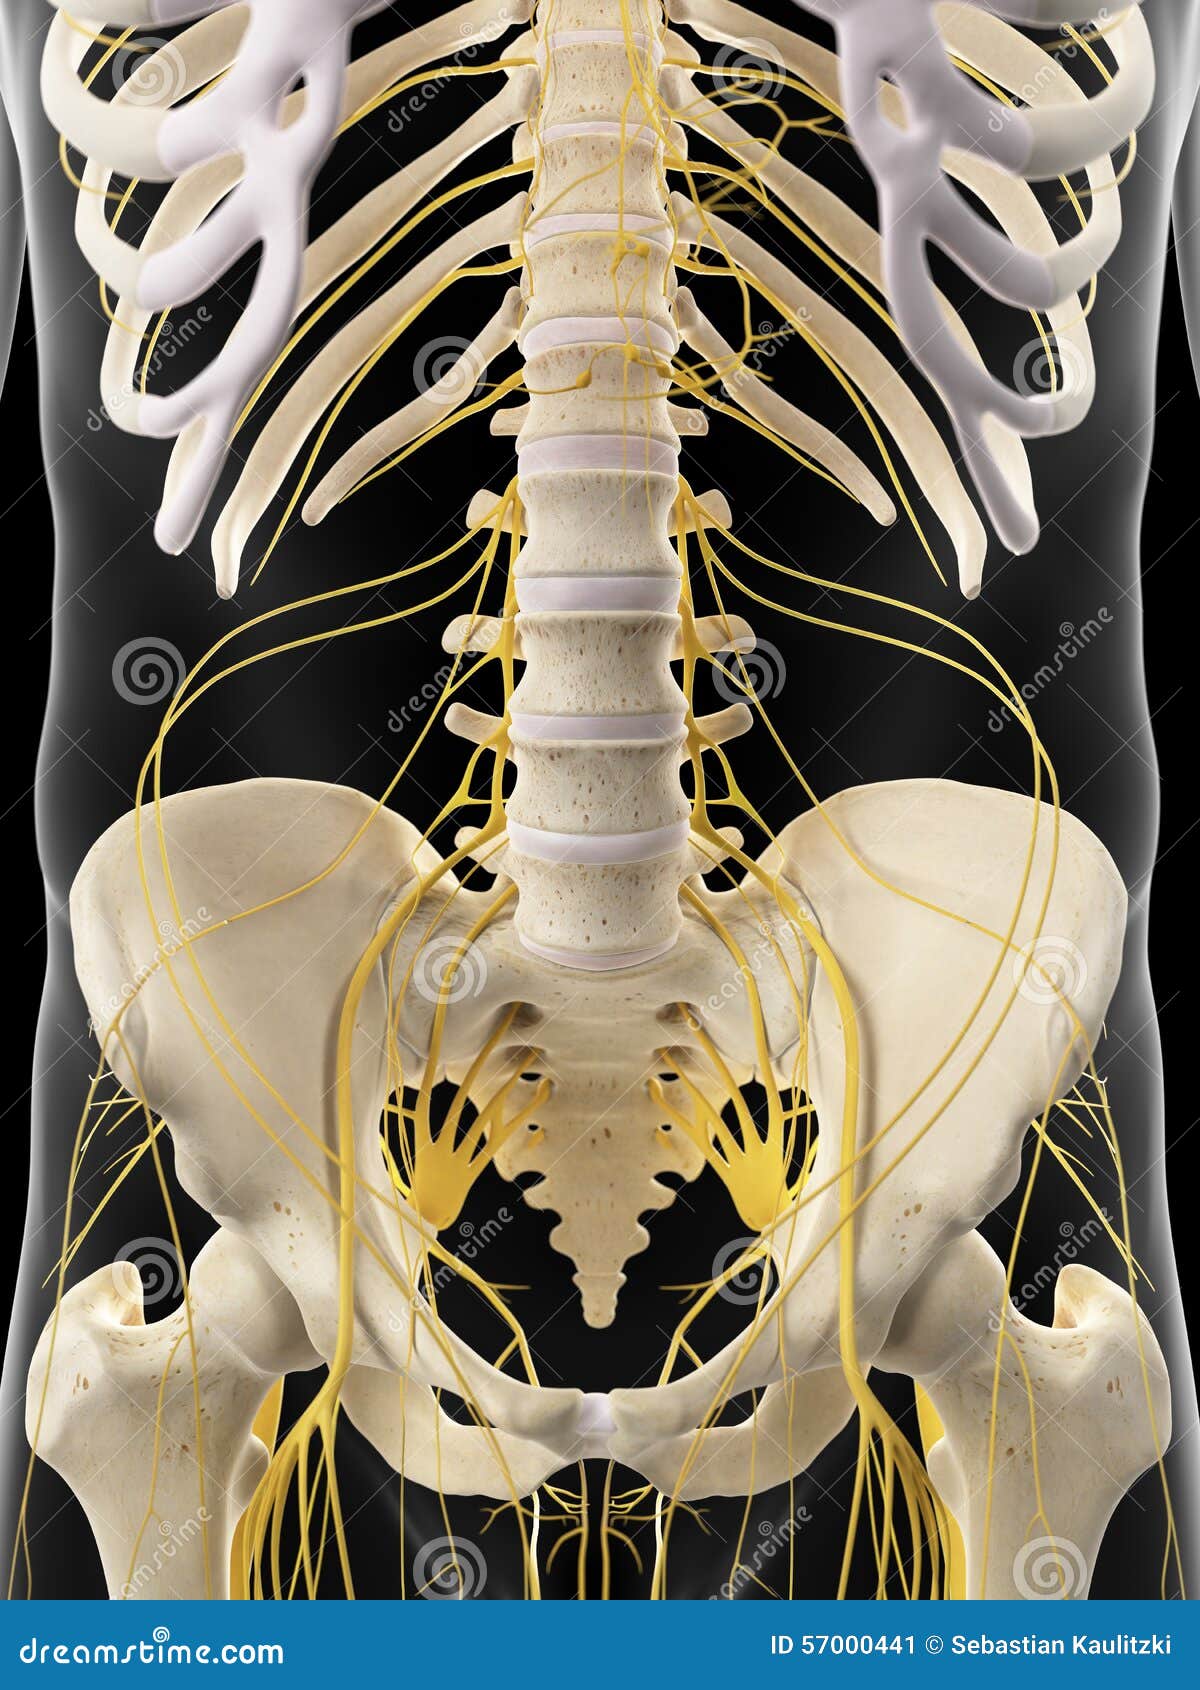 the abdominal nerves